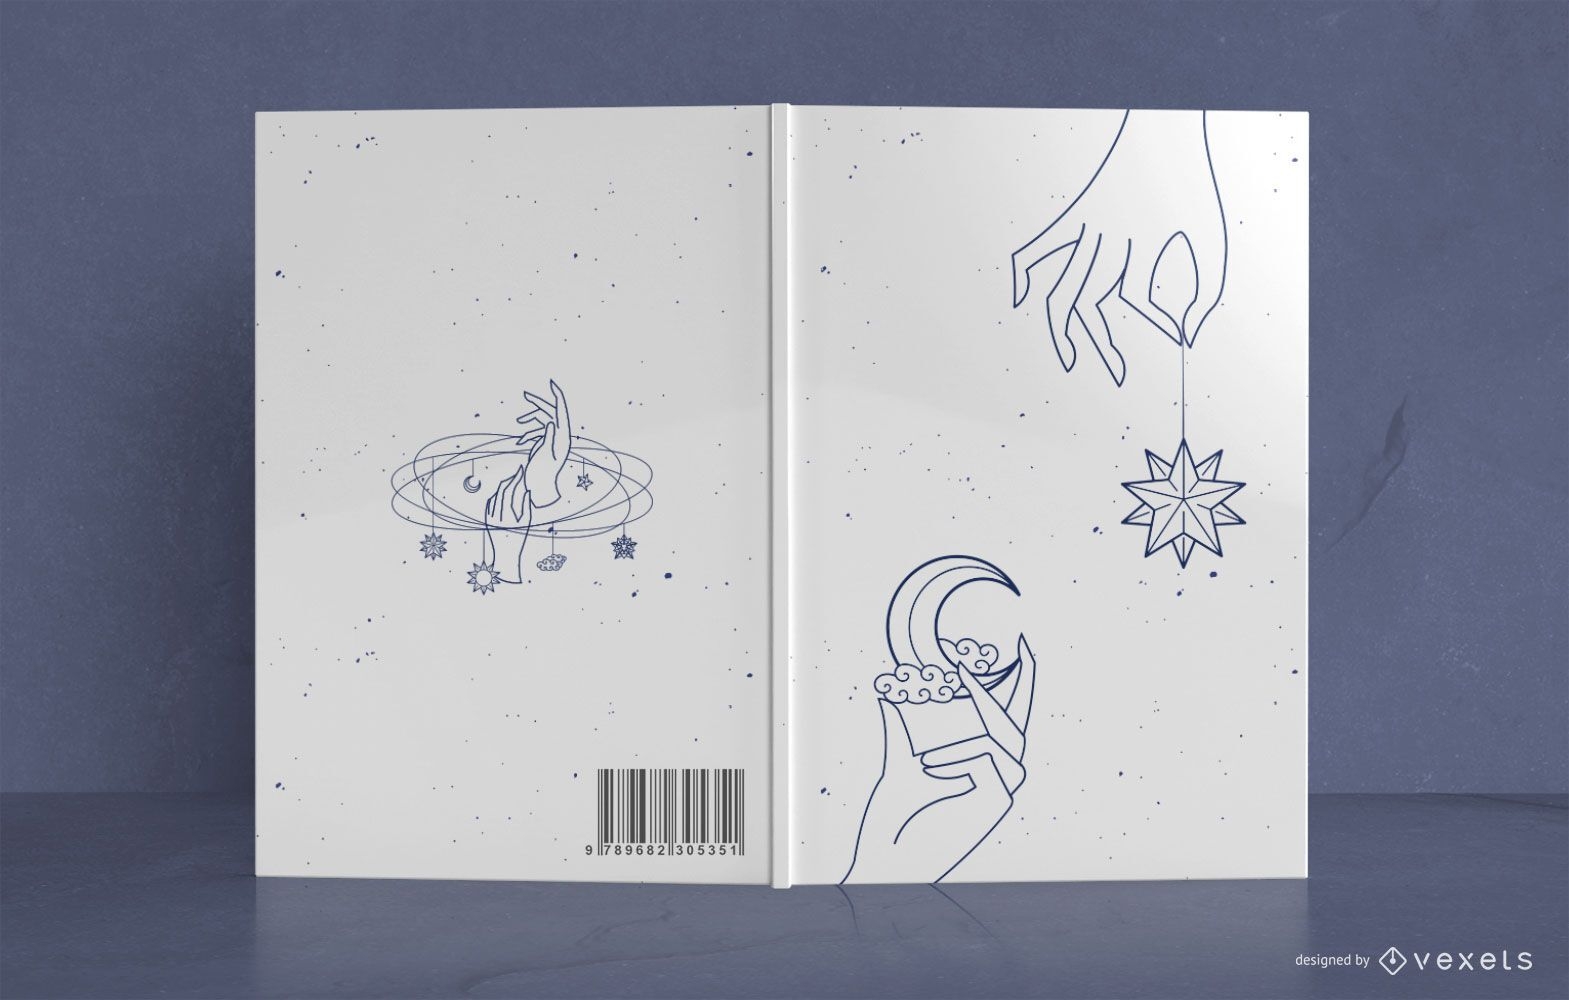 Mystic hands book cover design